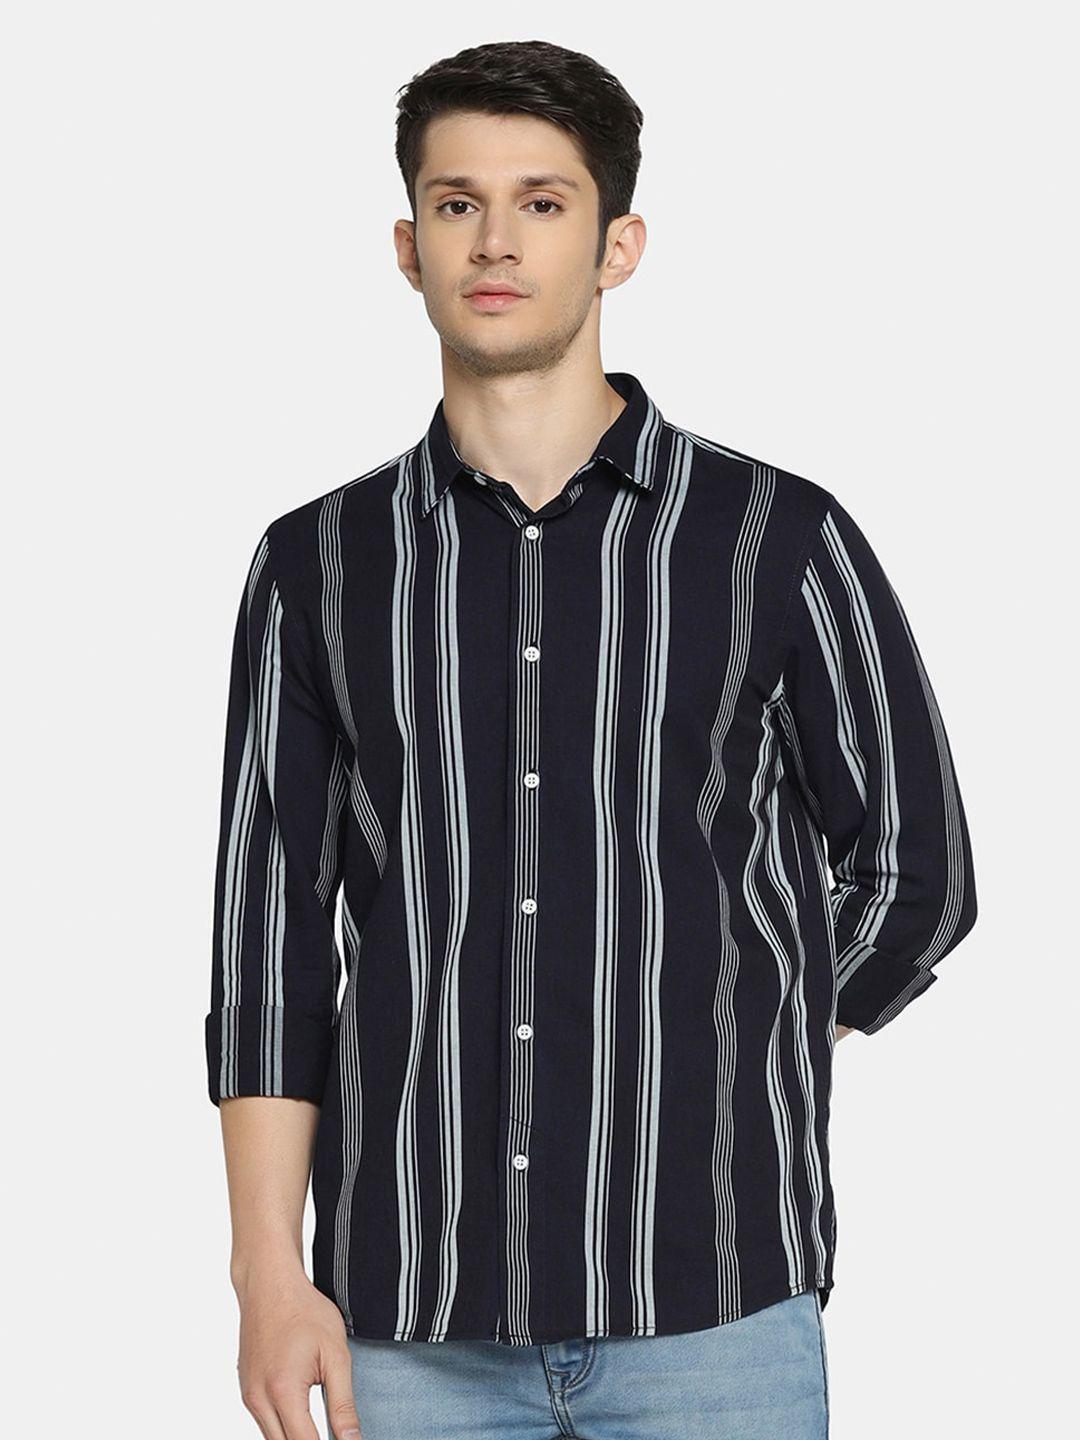 blackberrys-men-slim-fit-striped-cotton-casual-shirt